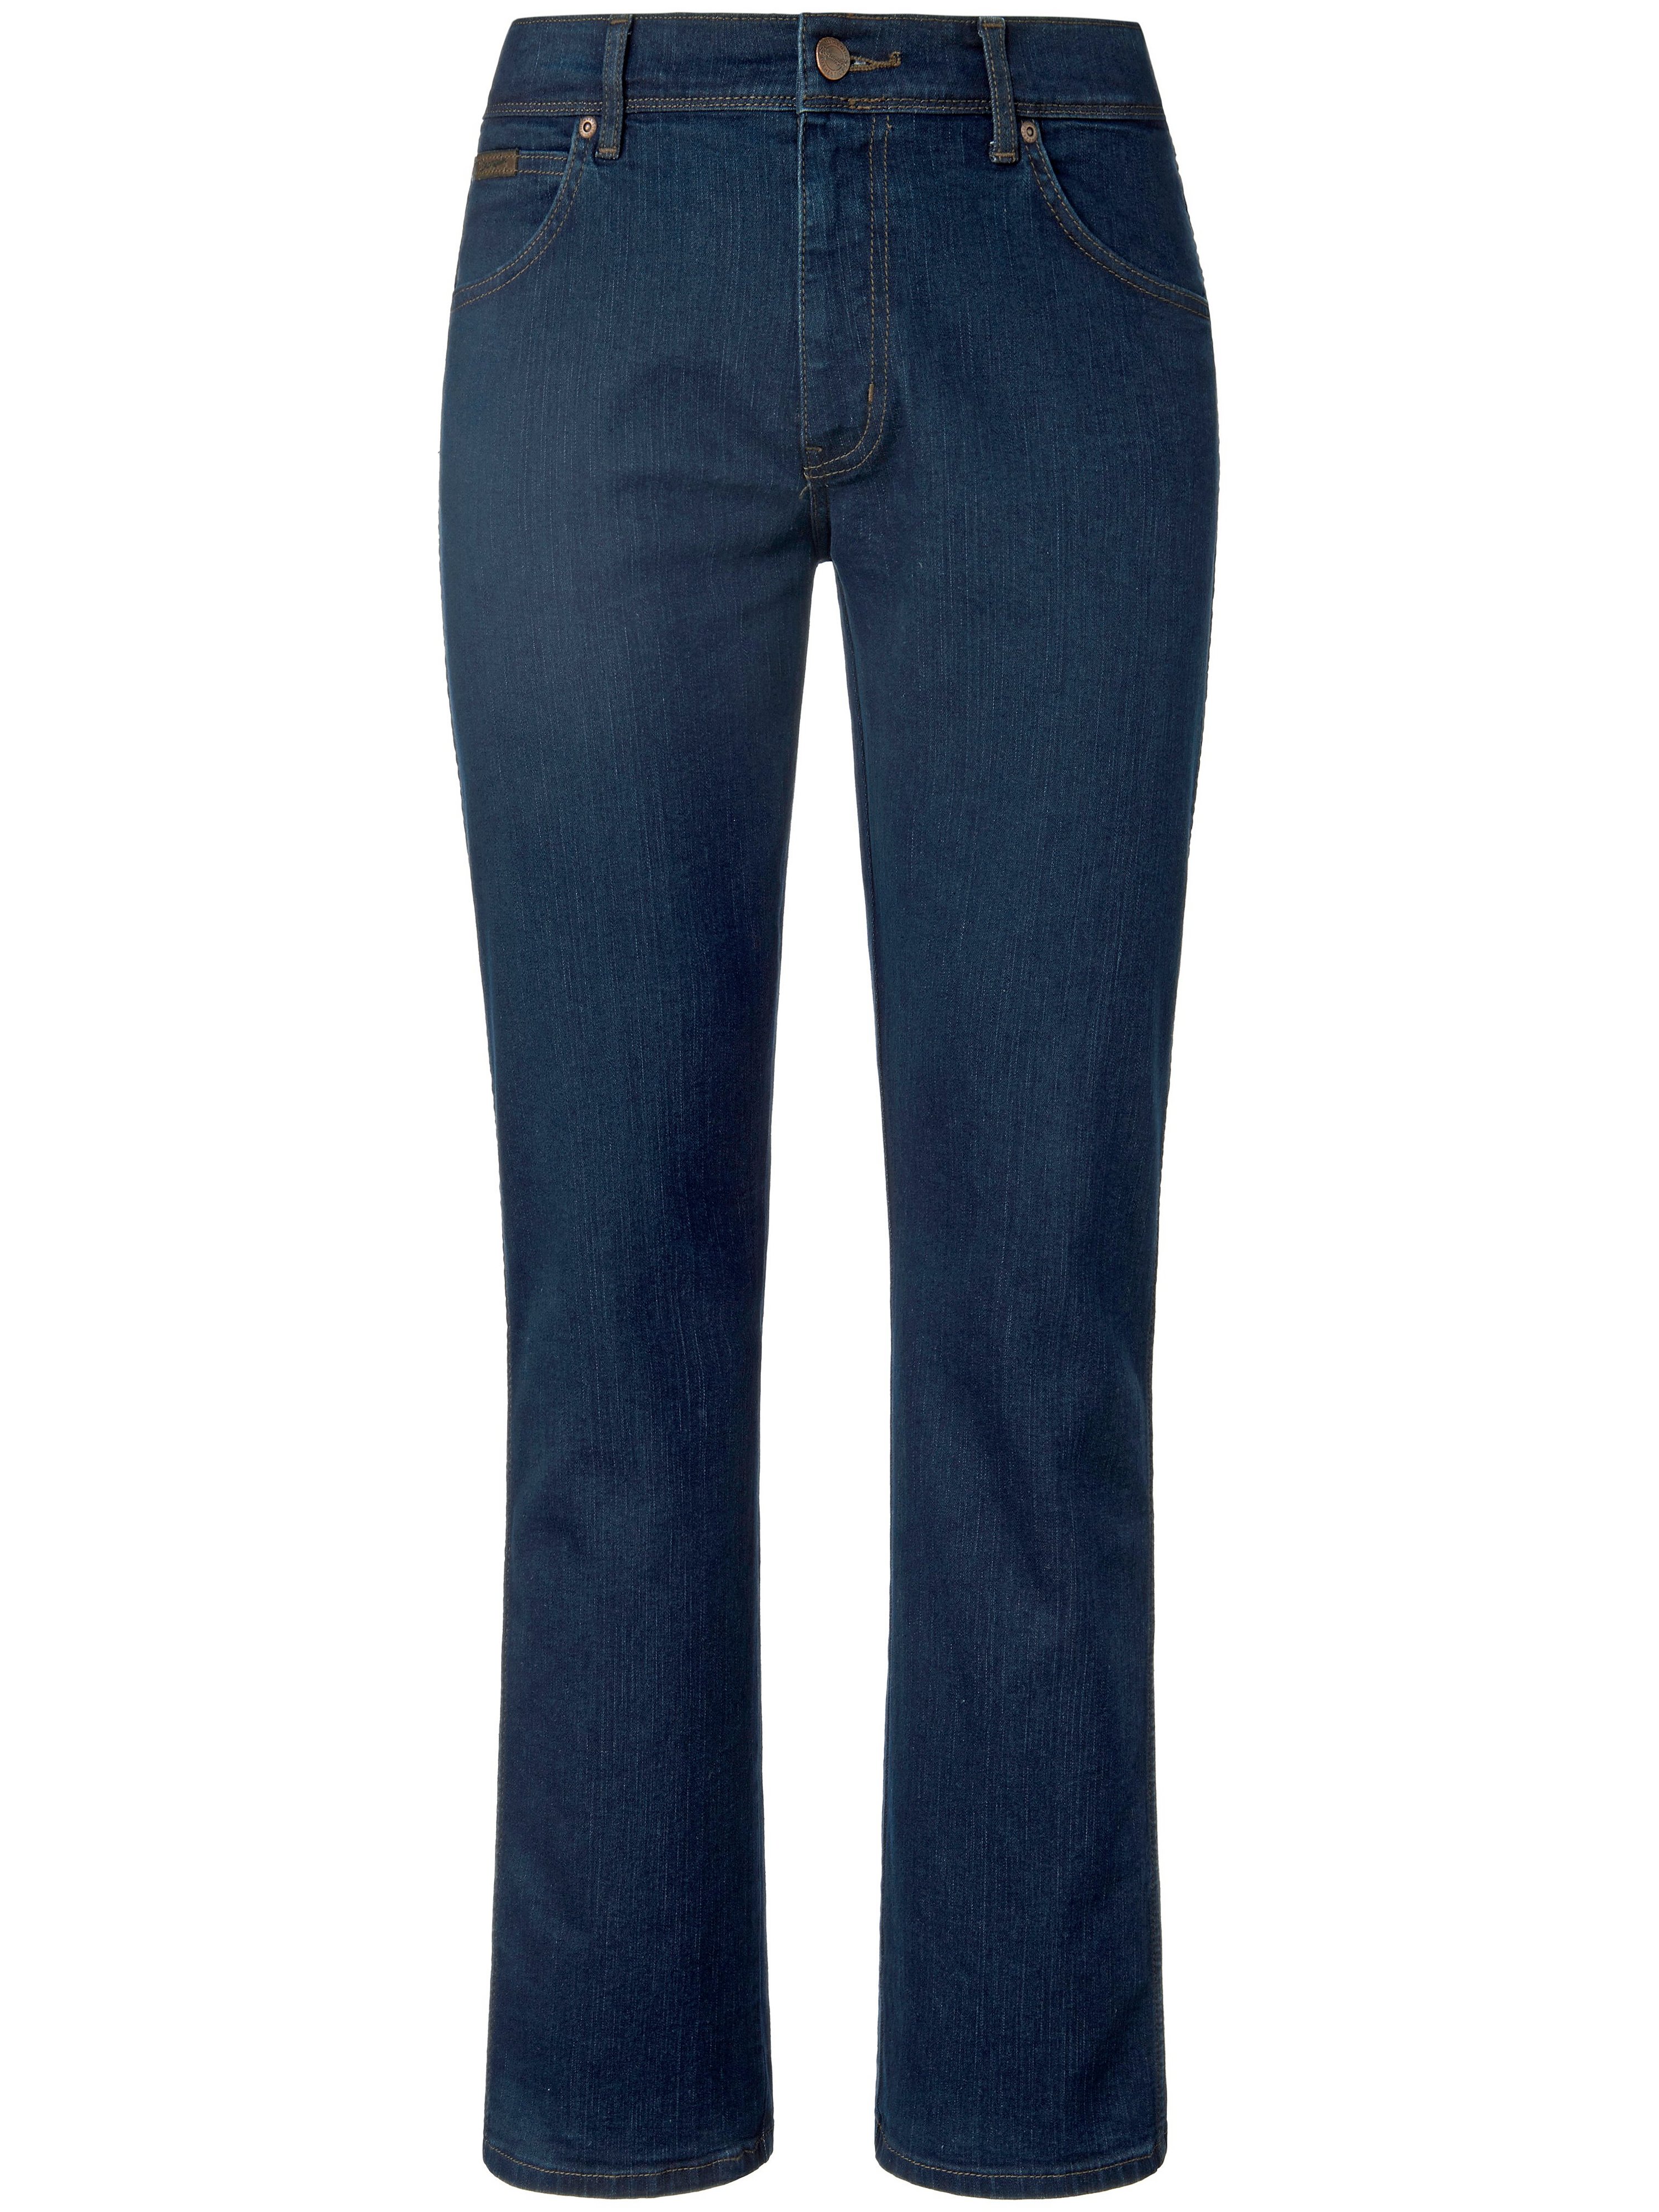 Jeans, Inch 32 Wrangler blau Größe: 40